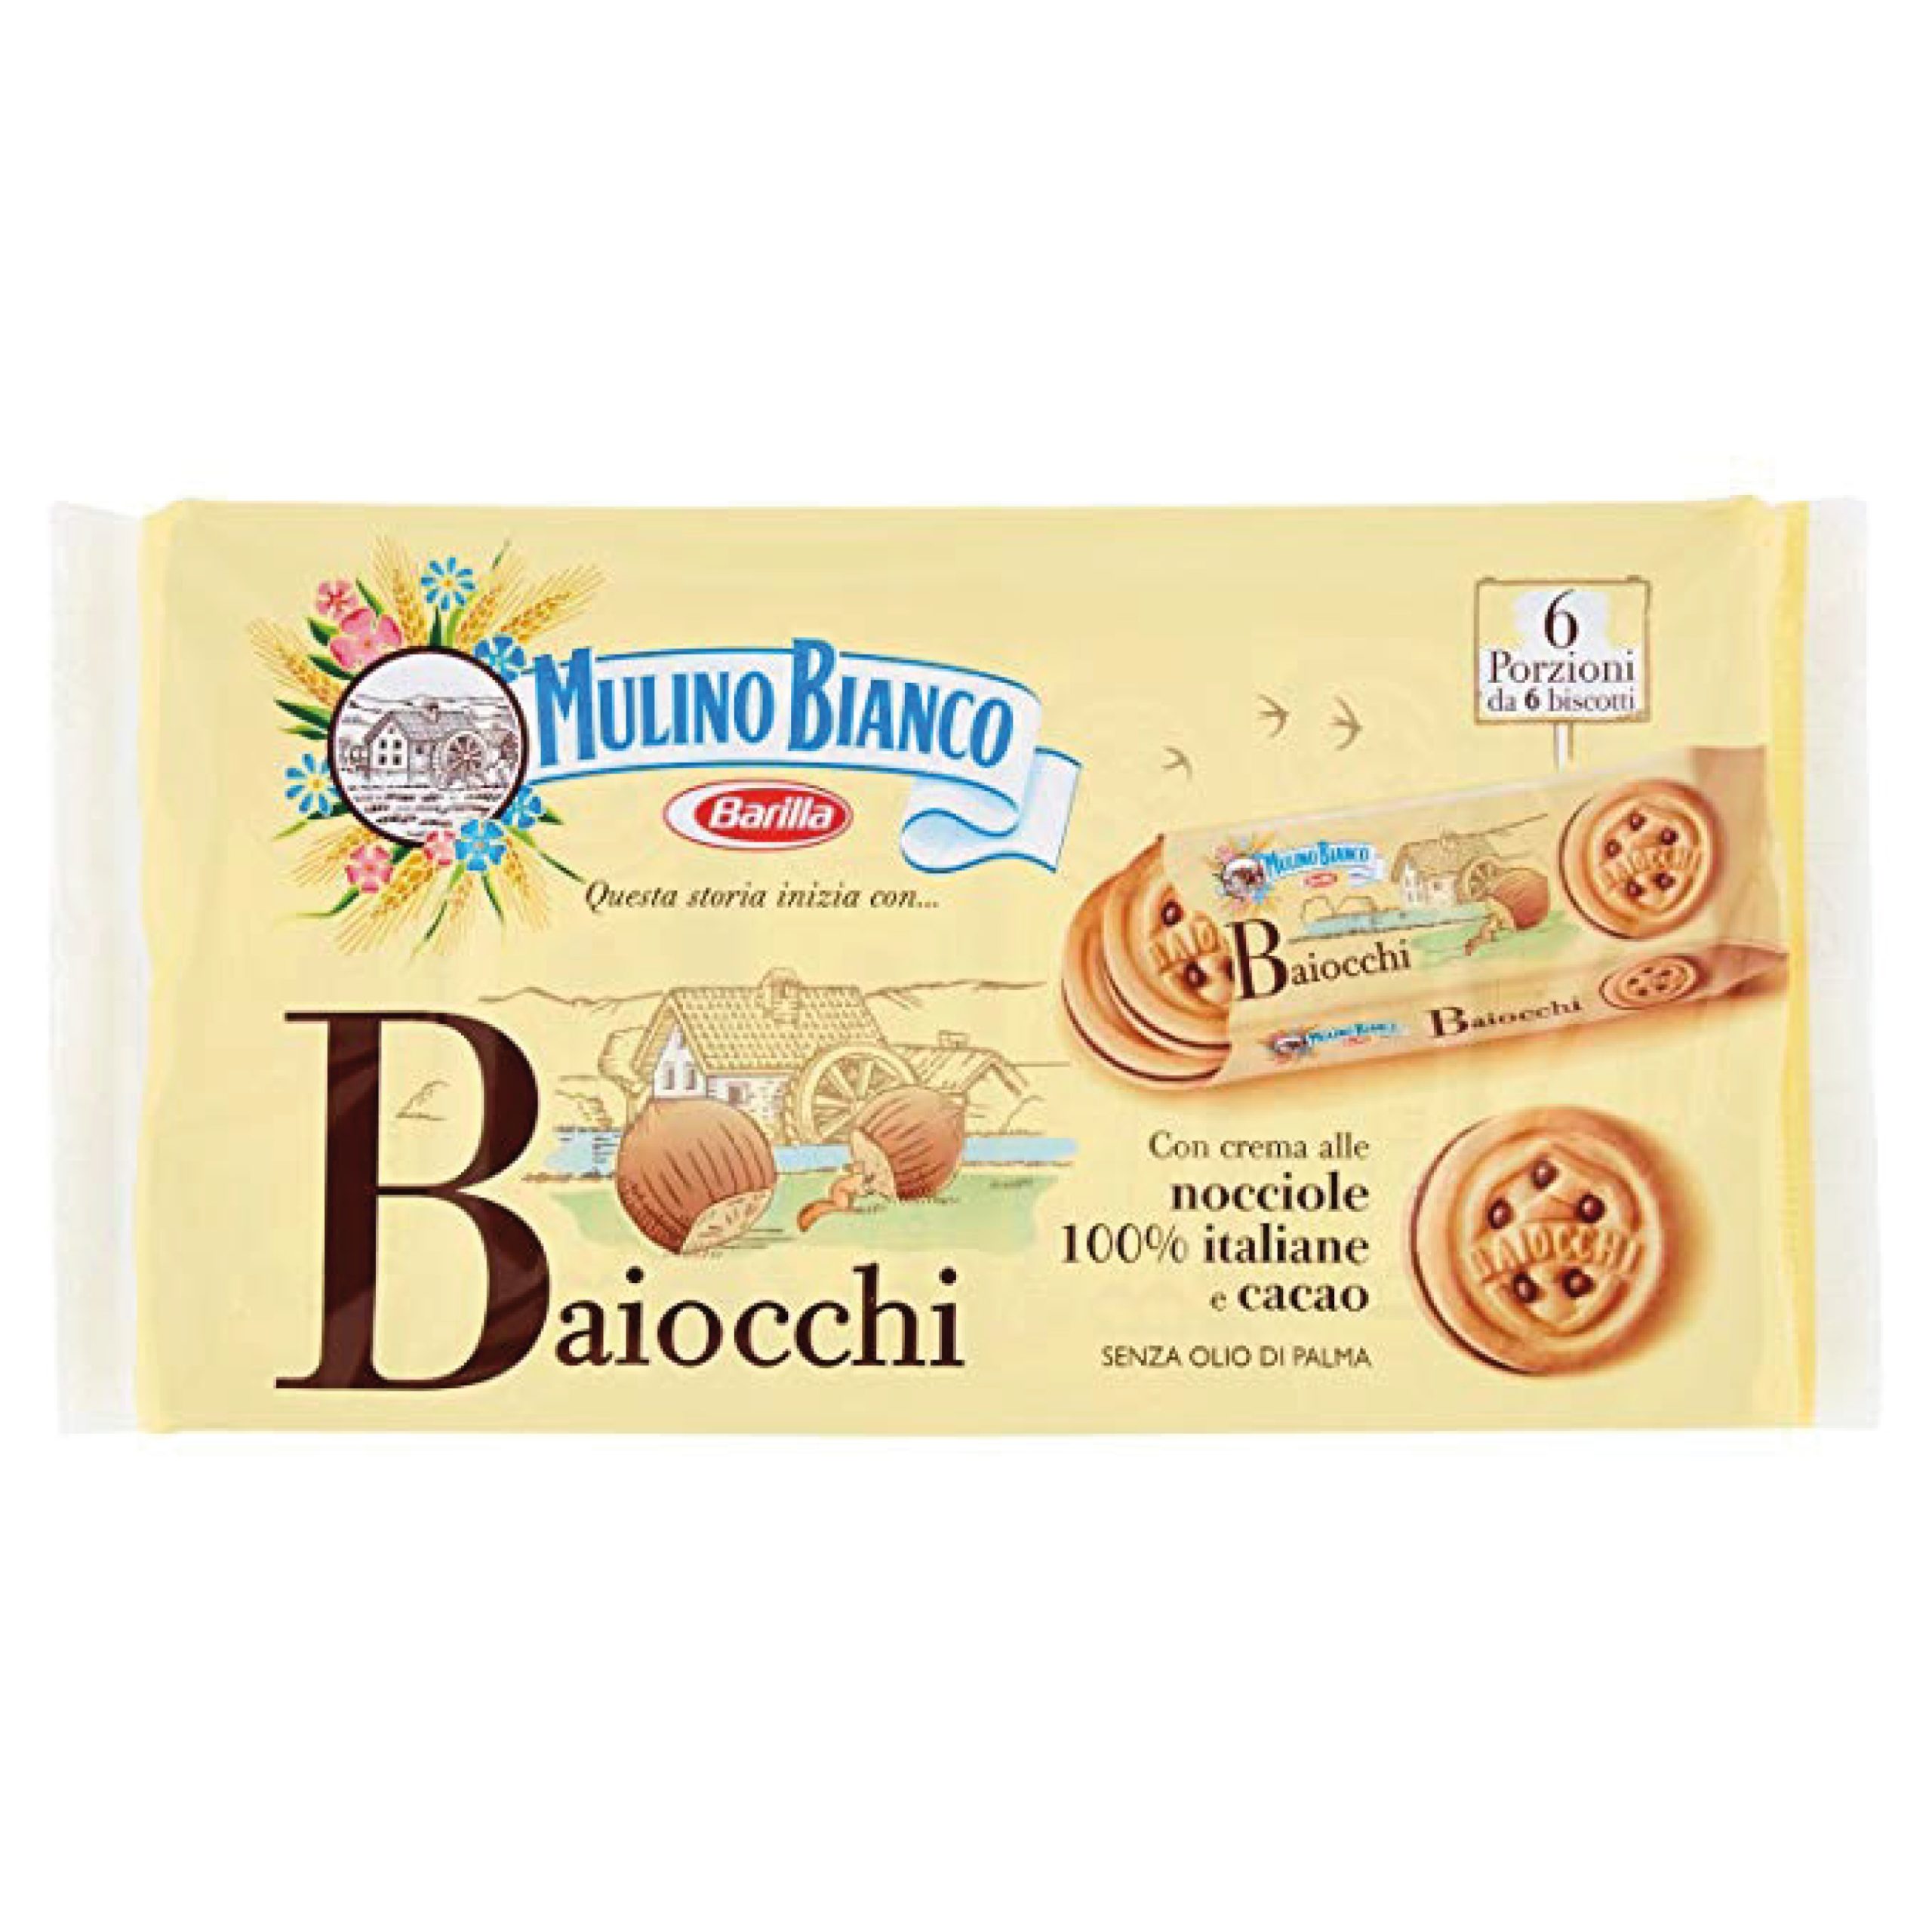 Mulino Bianco - Baiocchi snack 280gr